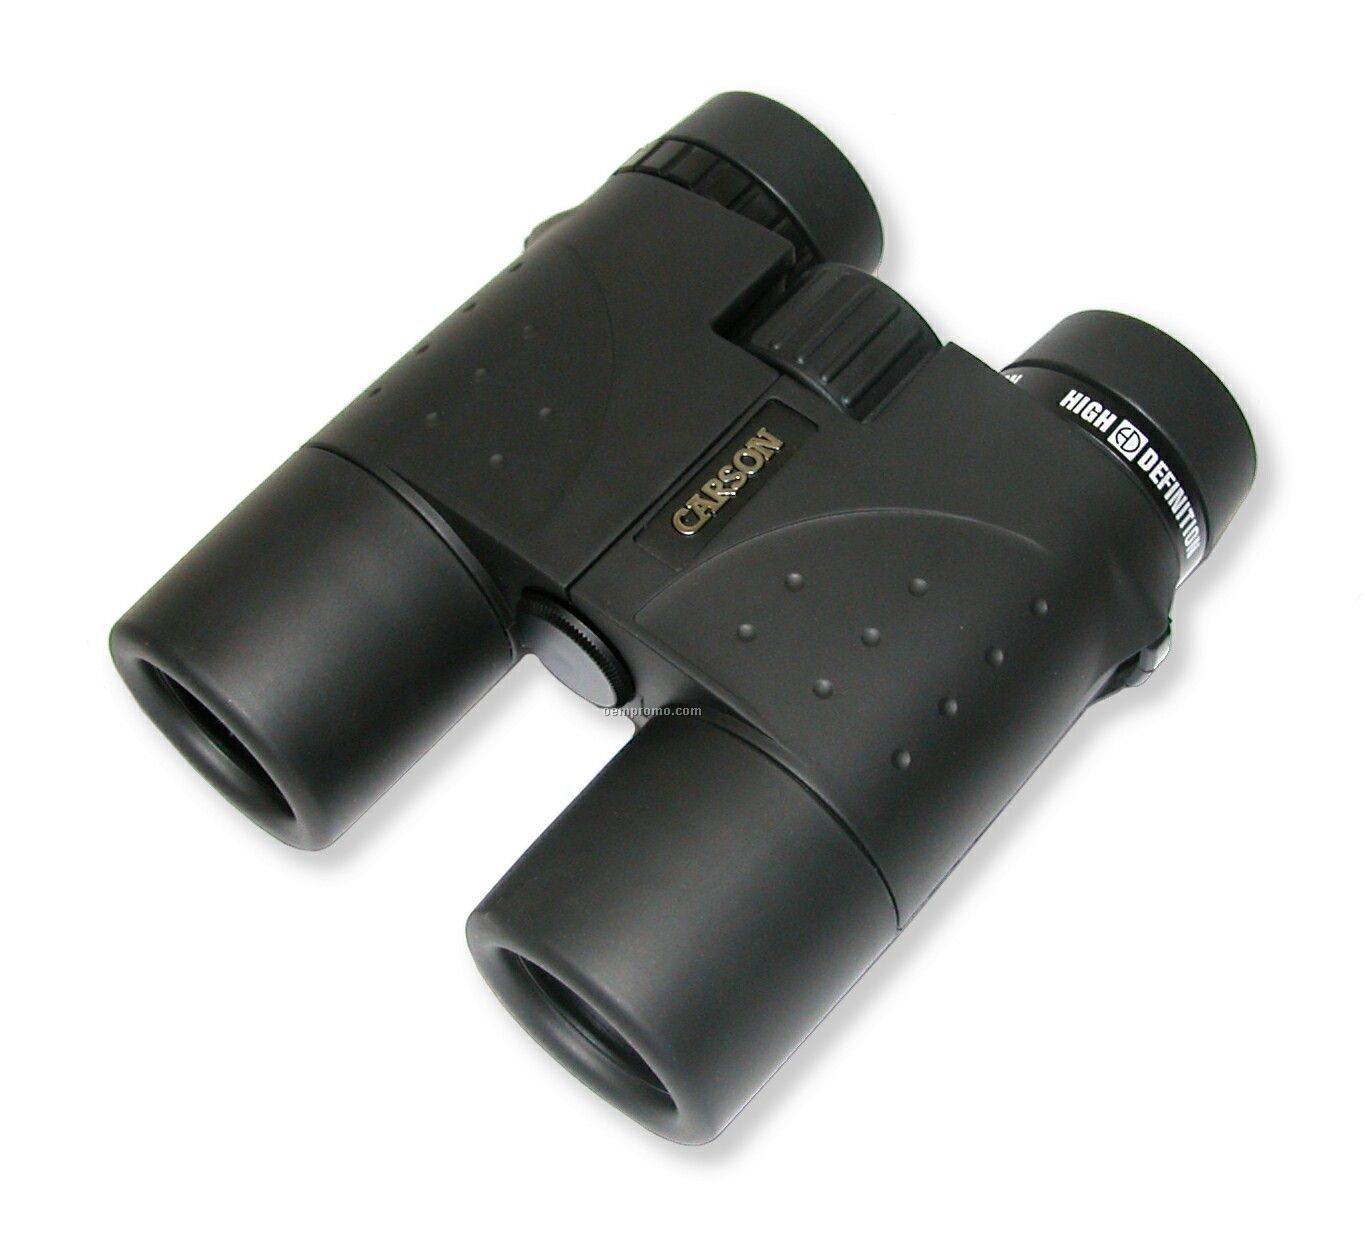 Xm Series High Definition Binoculars (8x32mm)